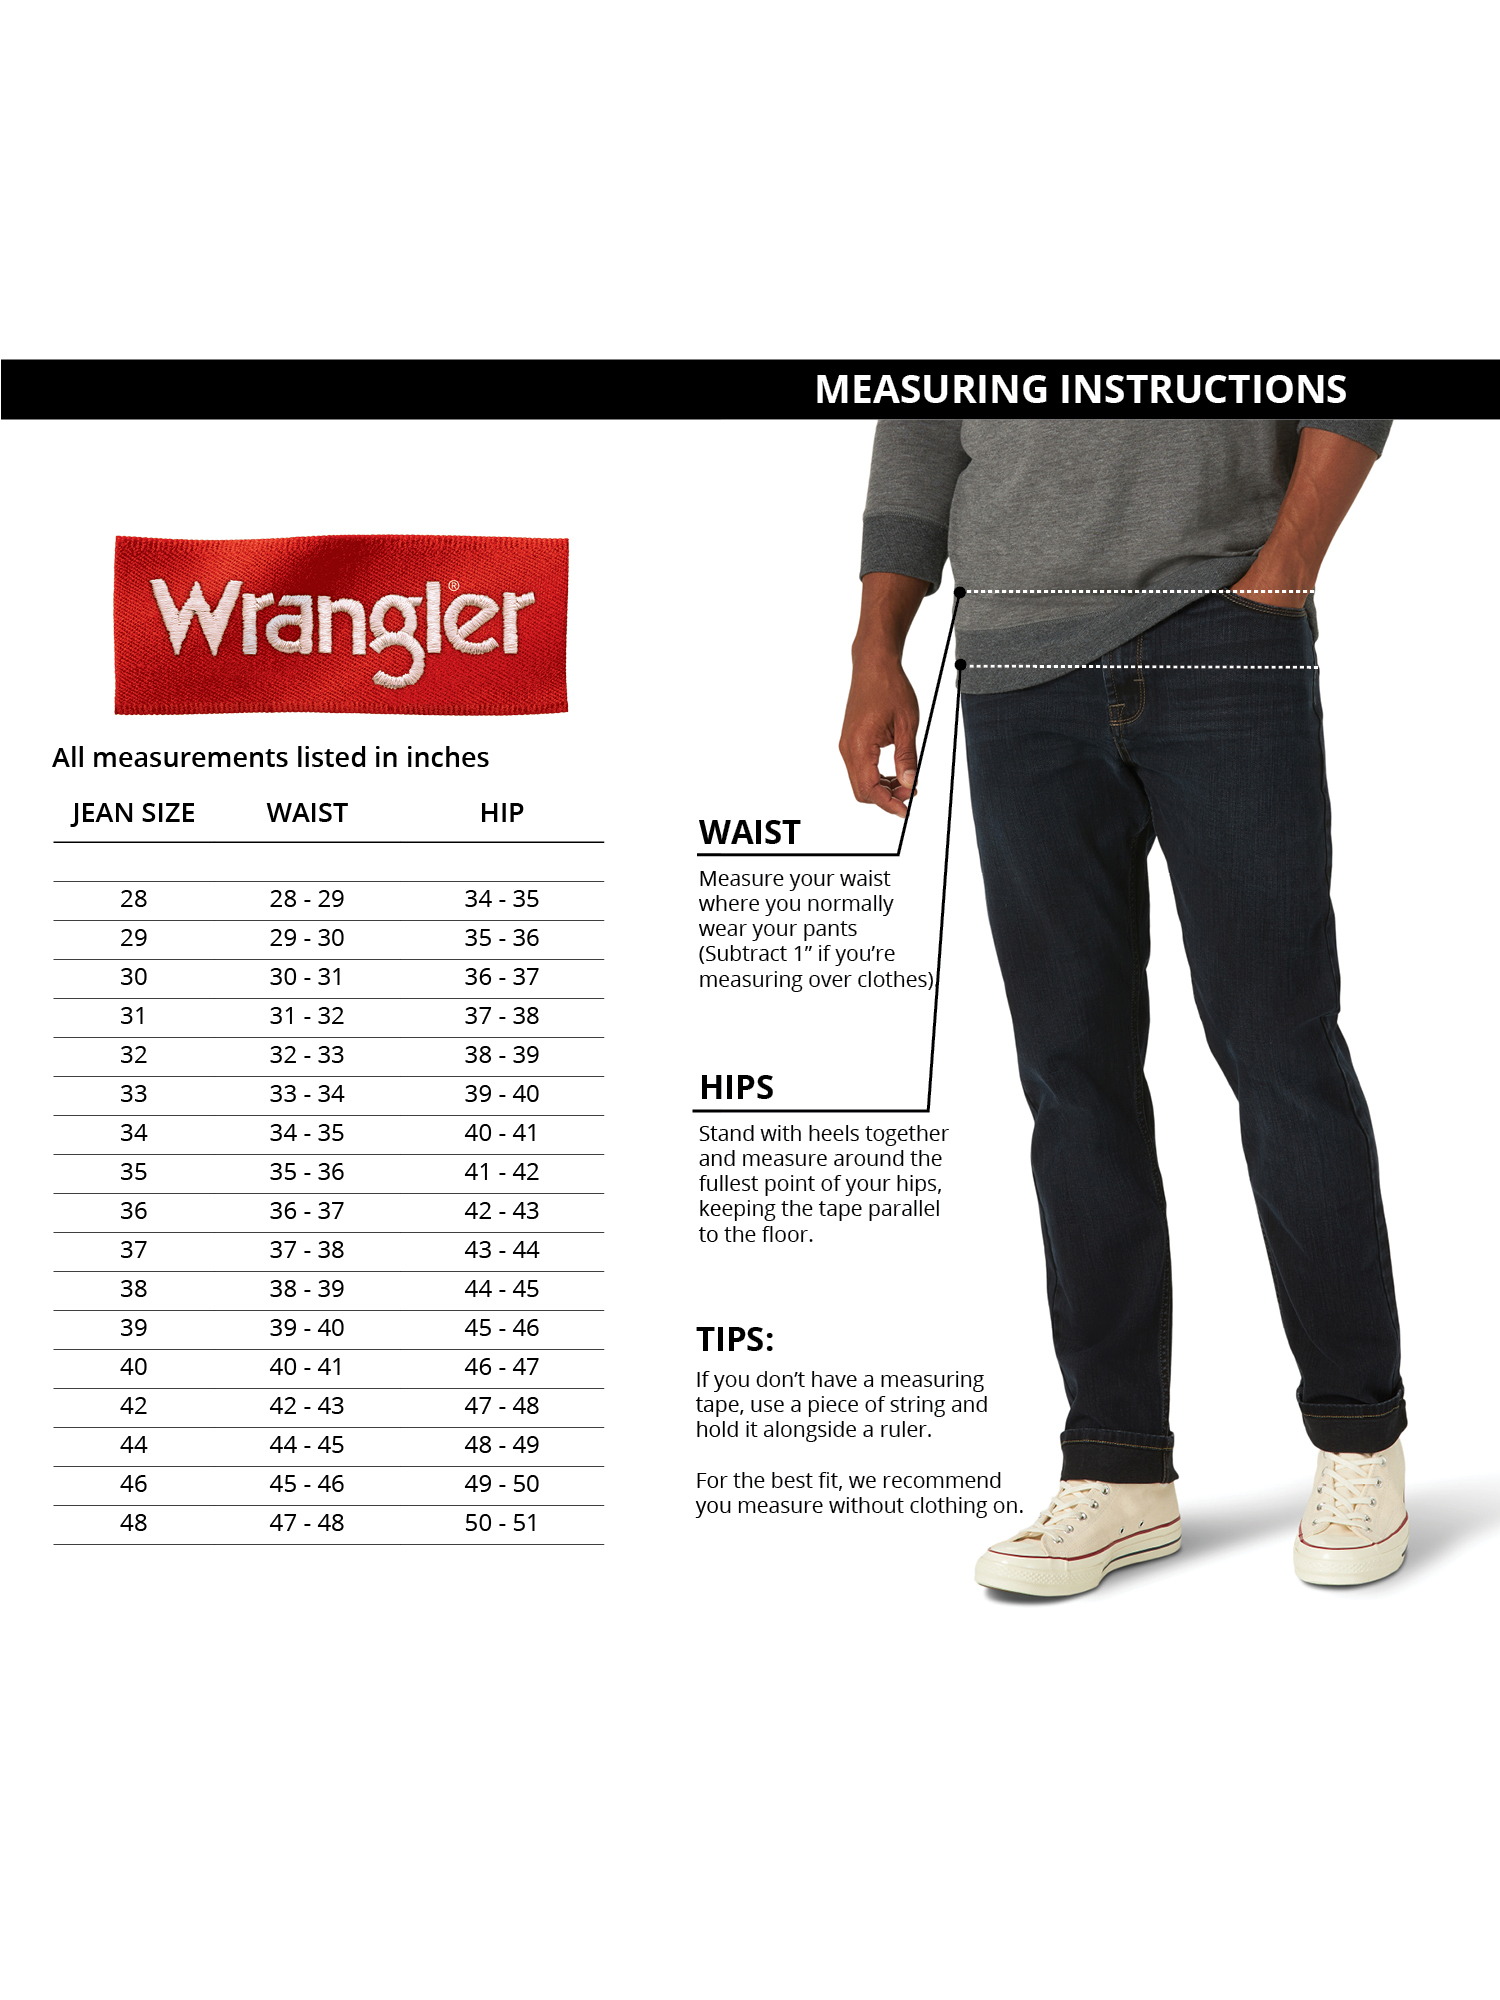 Wrangler Men's Athletic Fit Jean - Walmart.com